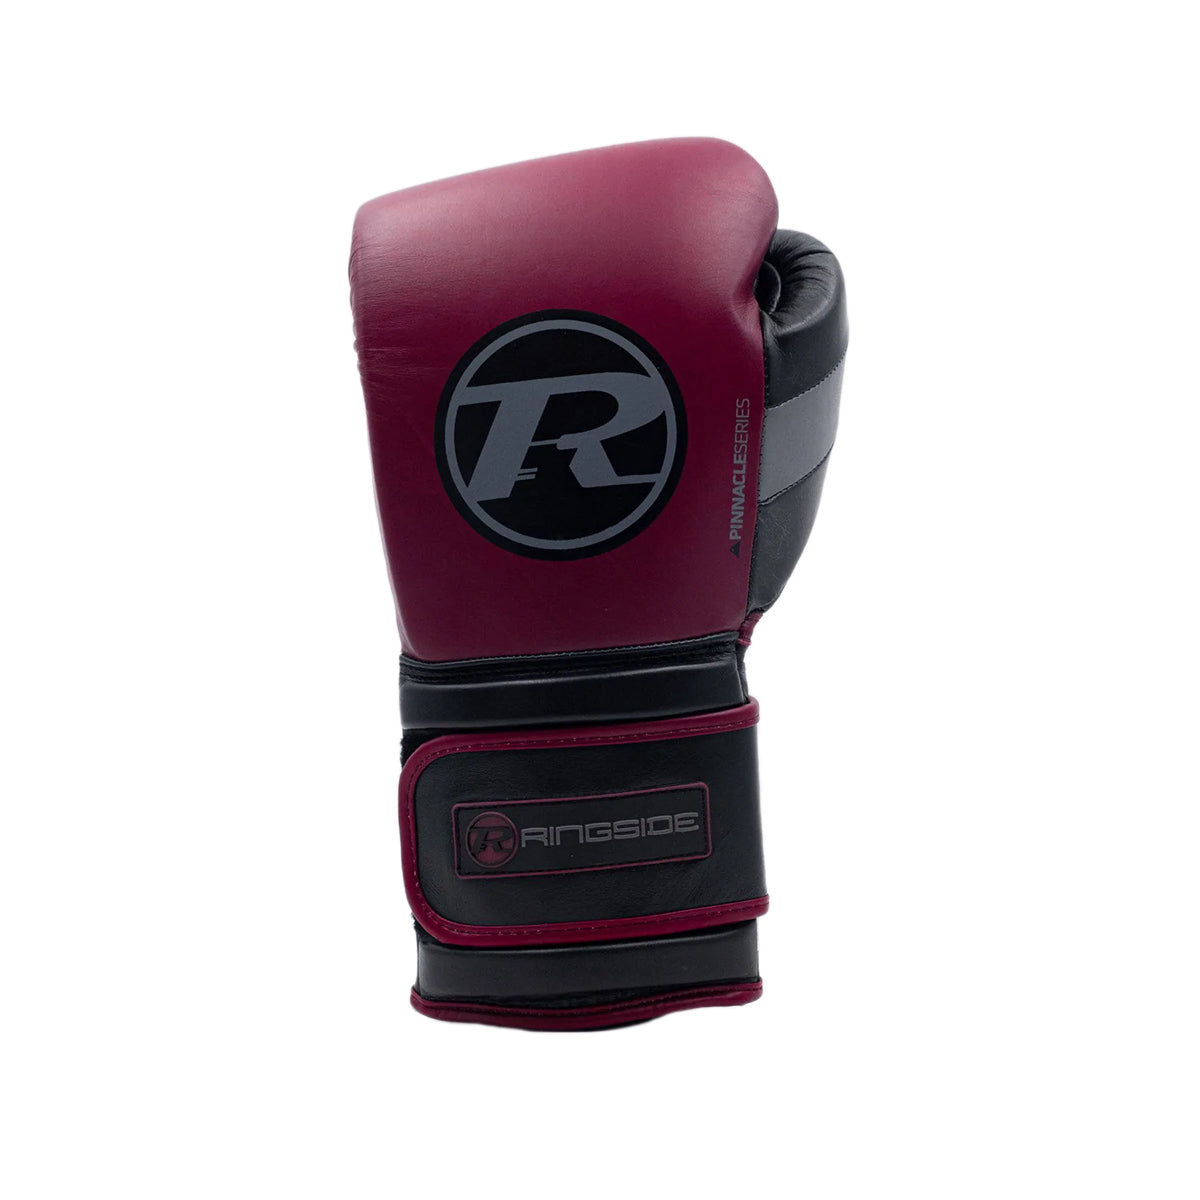 Ringside Pinnacle Series Leather Boxing Gloves - Maroon